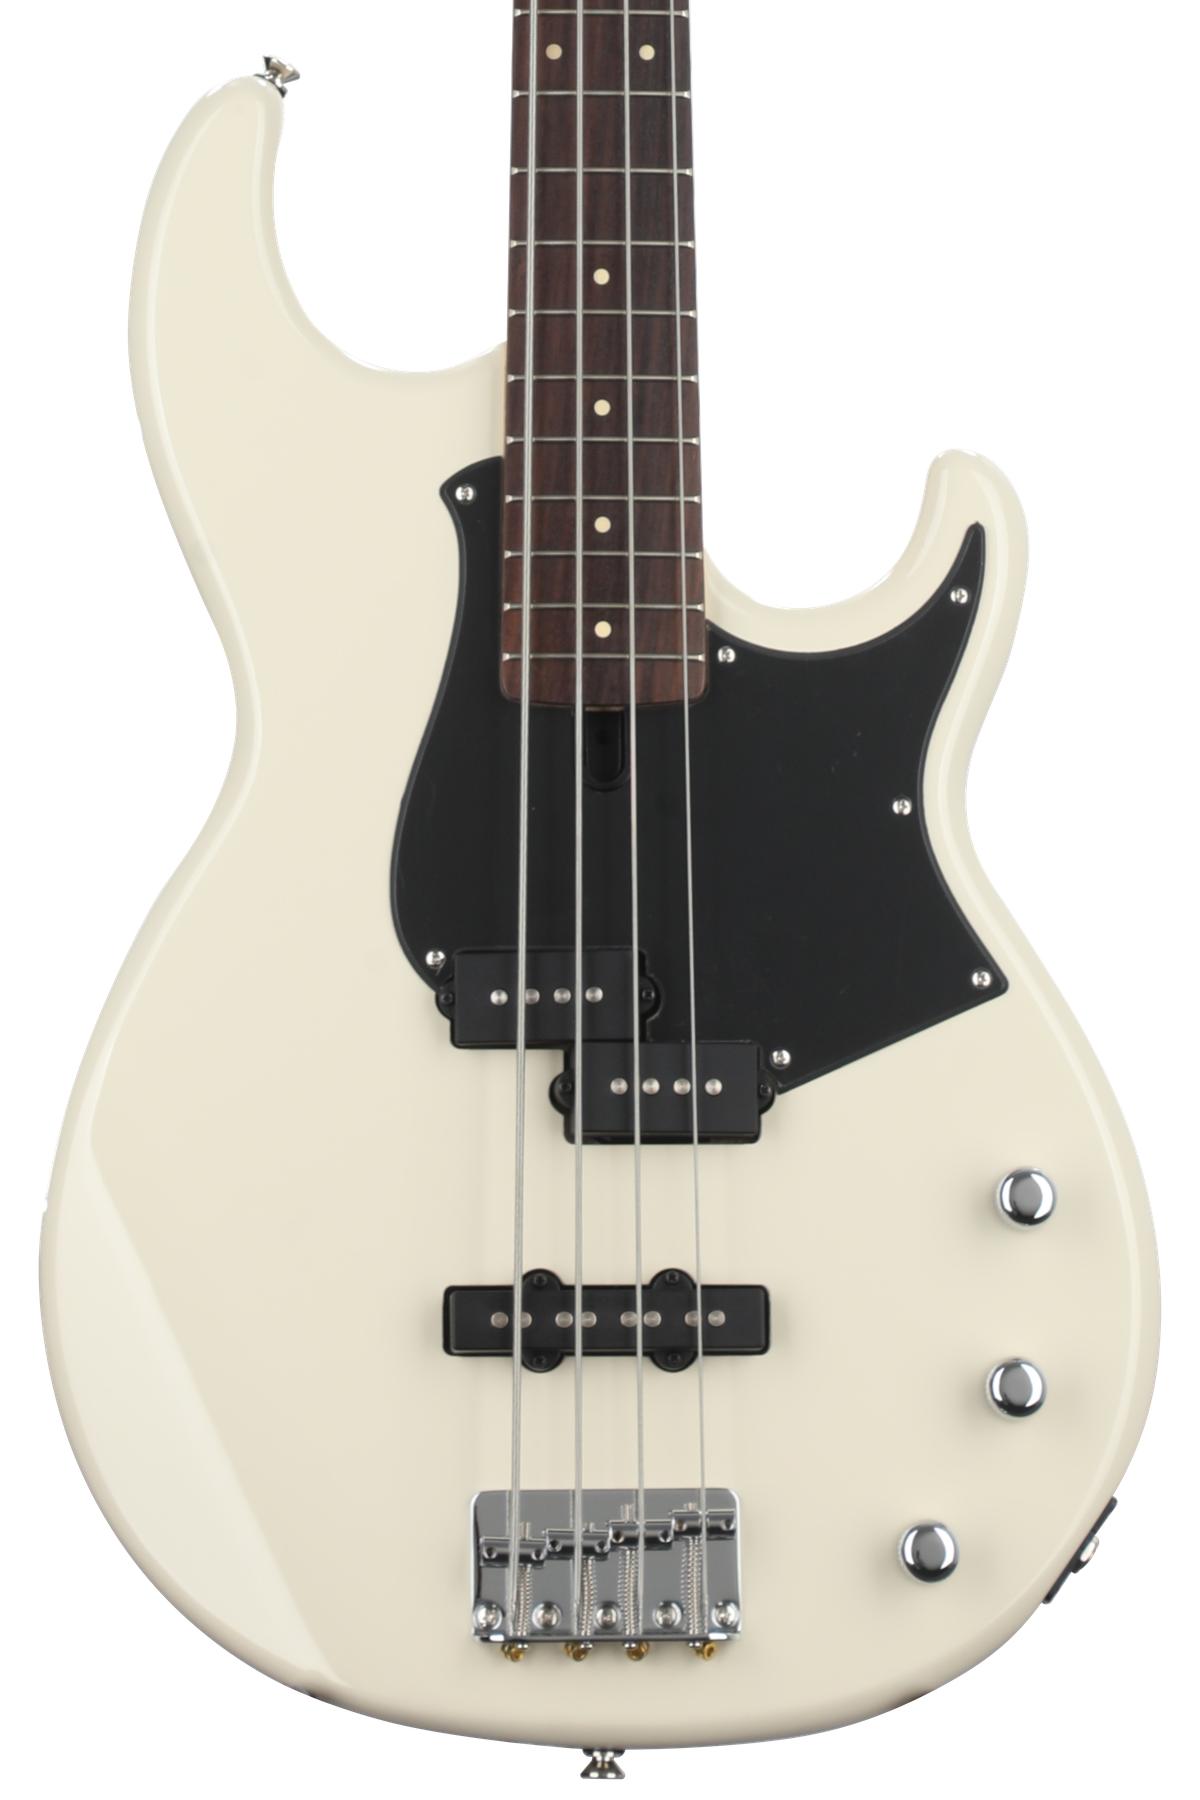 Yamaha BB234 Bass Guitar - Vintage White | Sweetwater